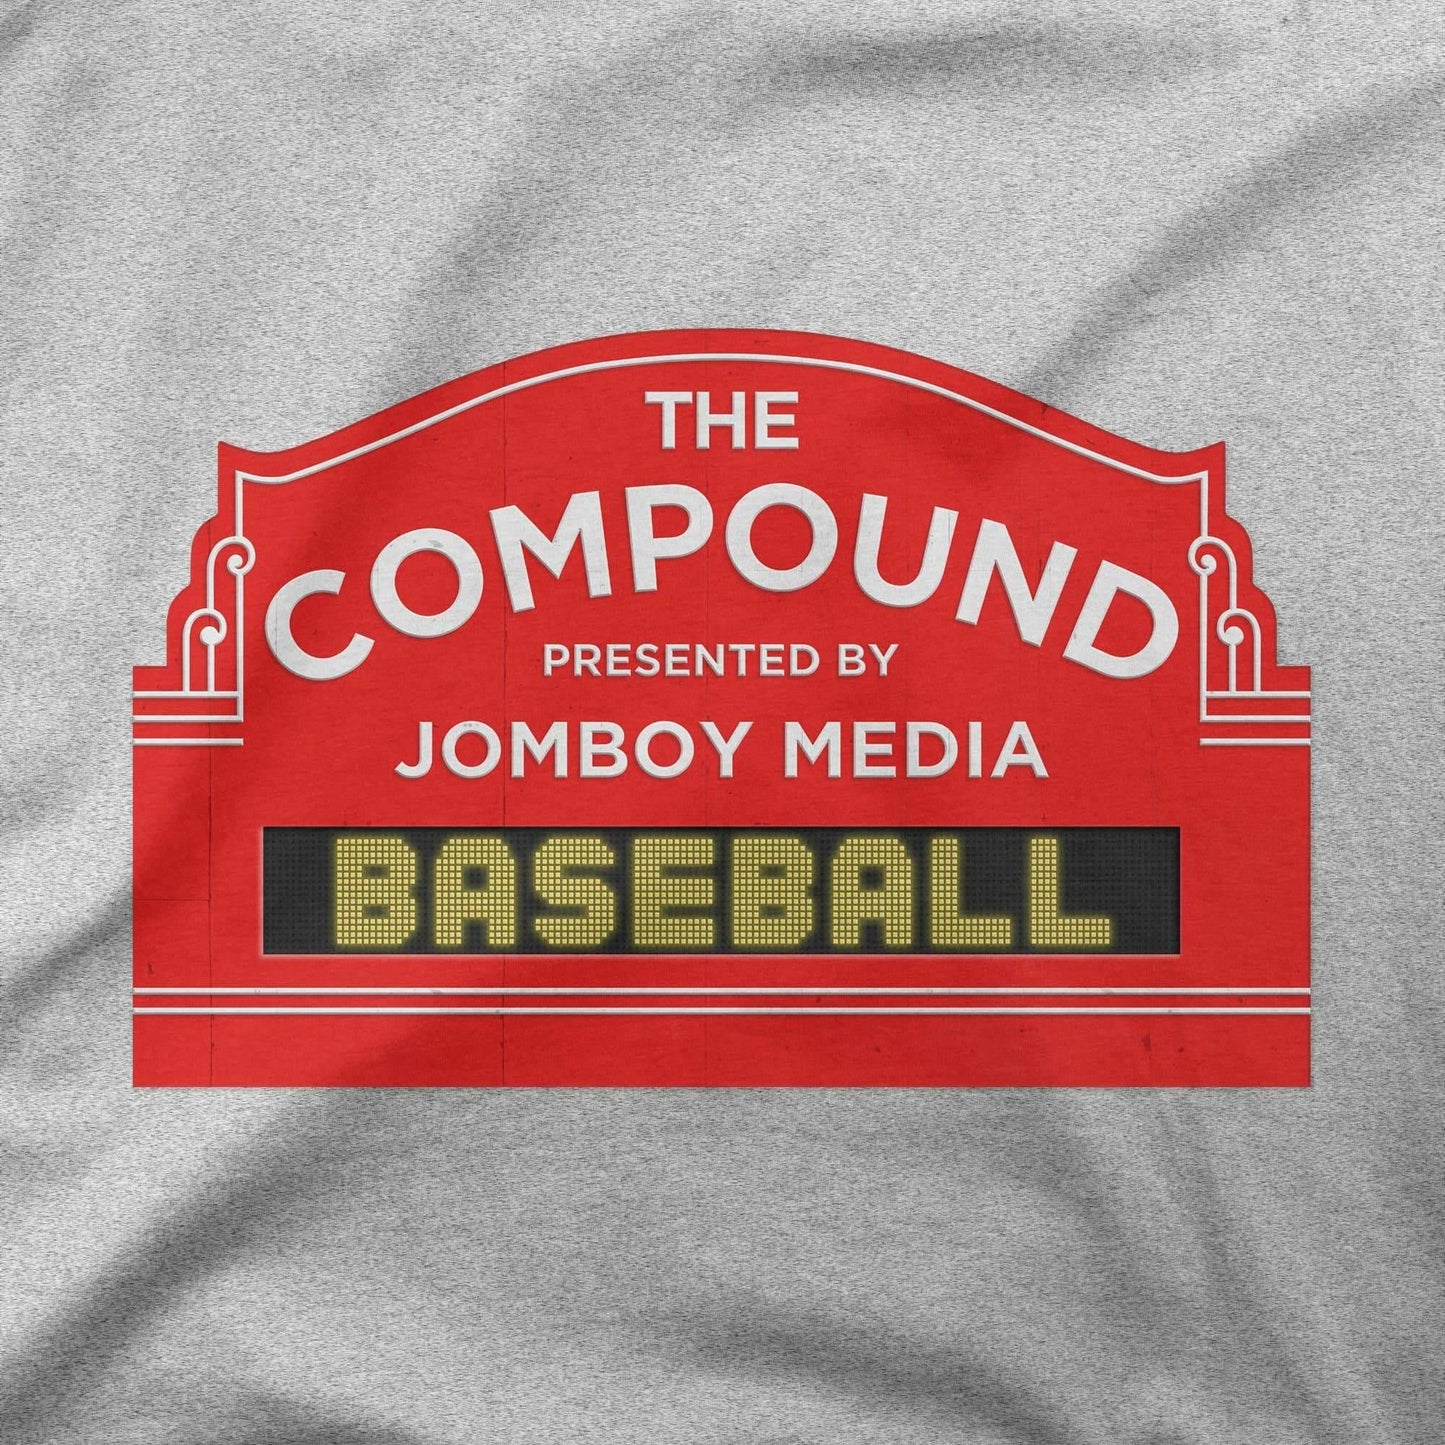 The Compound | Presented by JM Baseball | T-Shirt - Jomboy Media